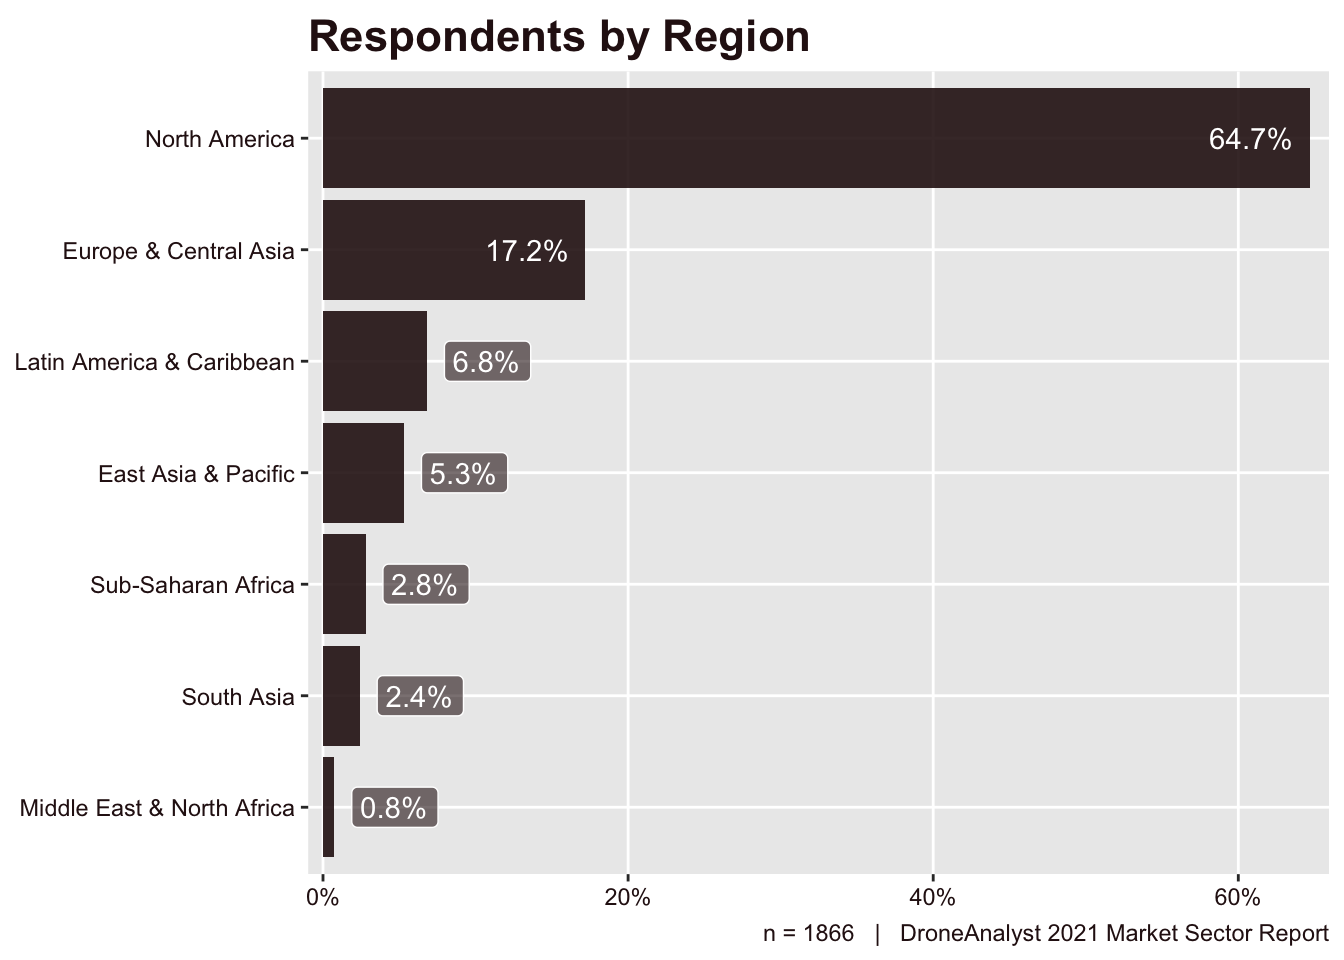 Respondents by Region